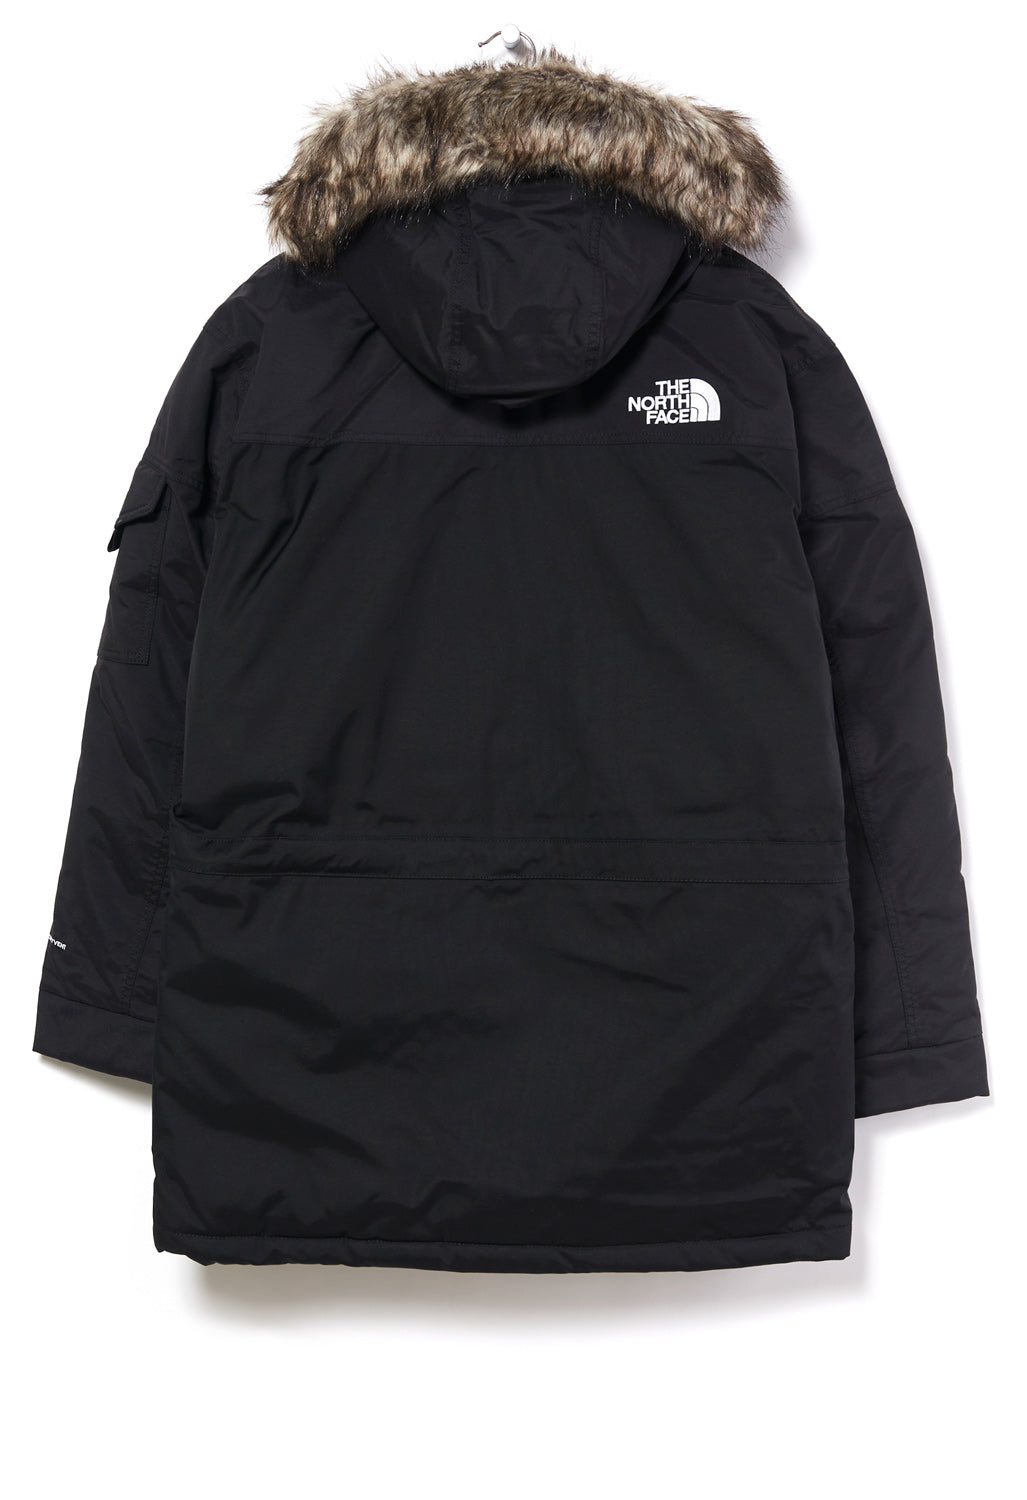 The North Face McMurdo 2 Men's Parka Jacket - TNF Black/TNF White Logo